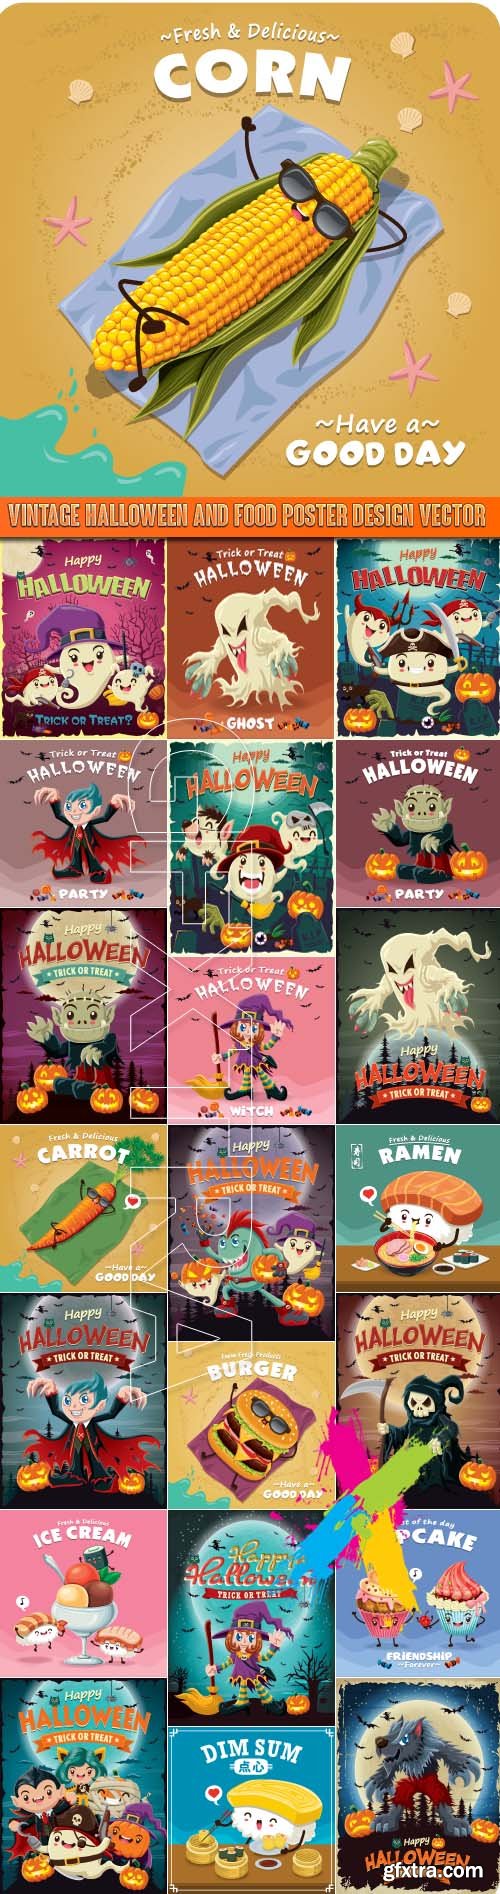 Vintage Halloween and food poster design vector